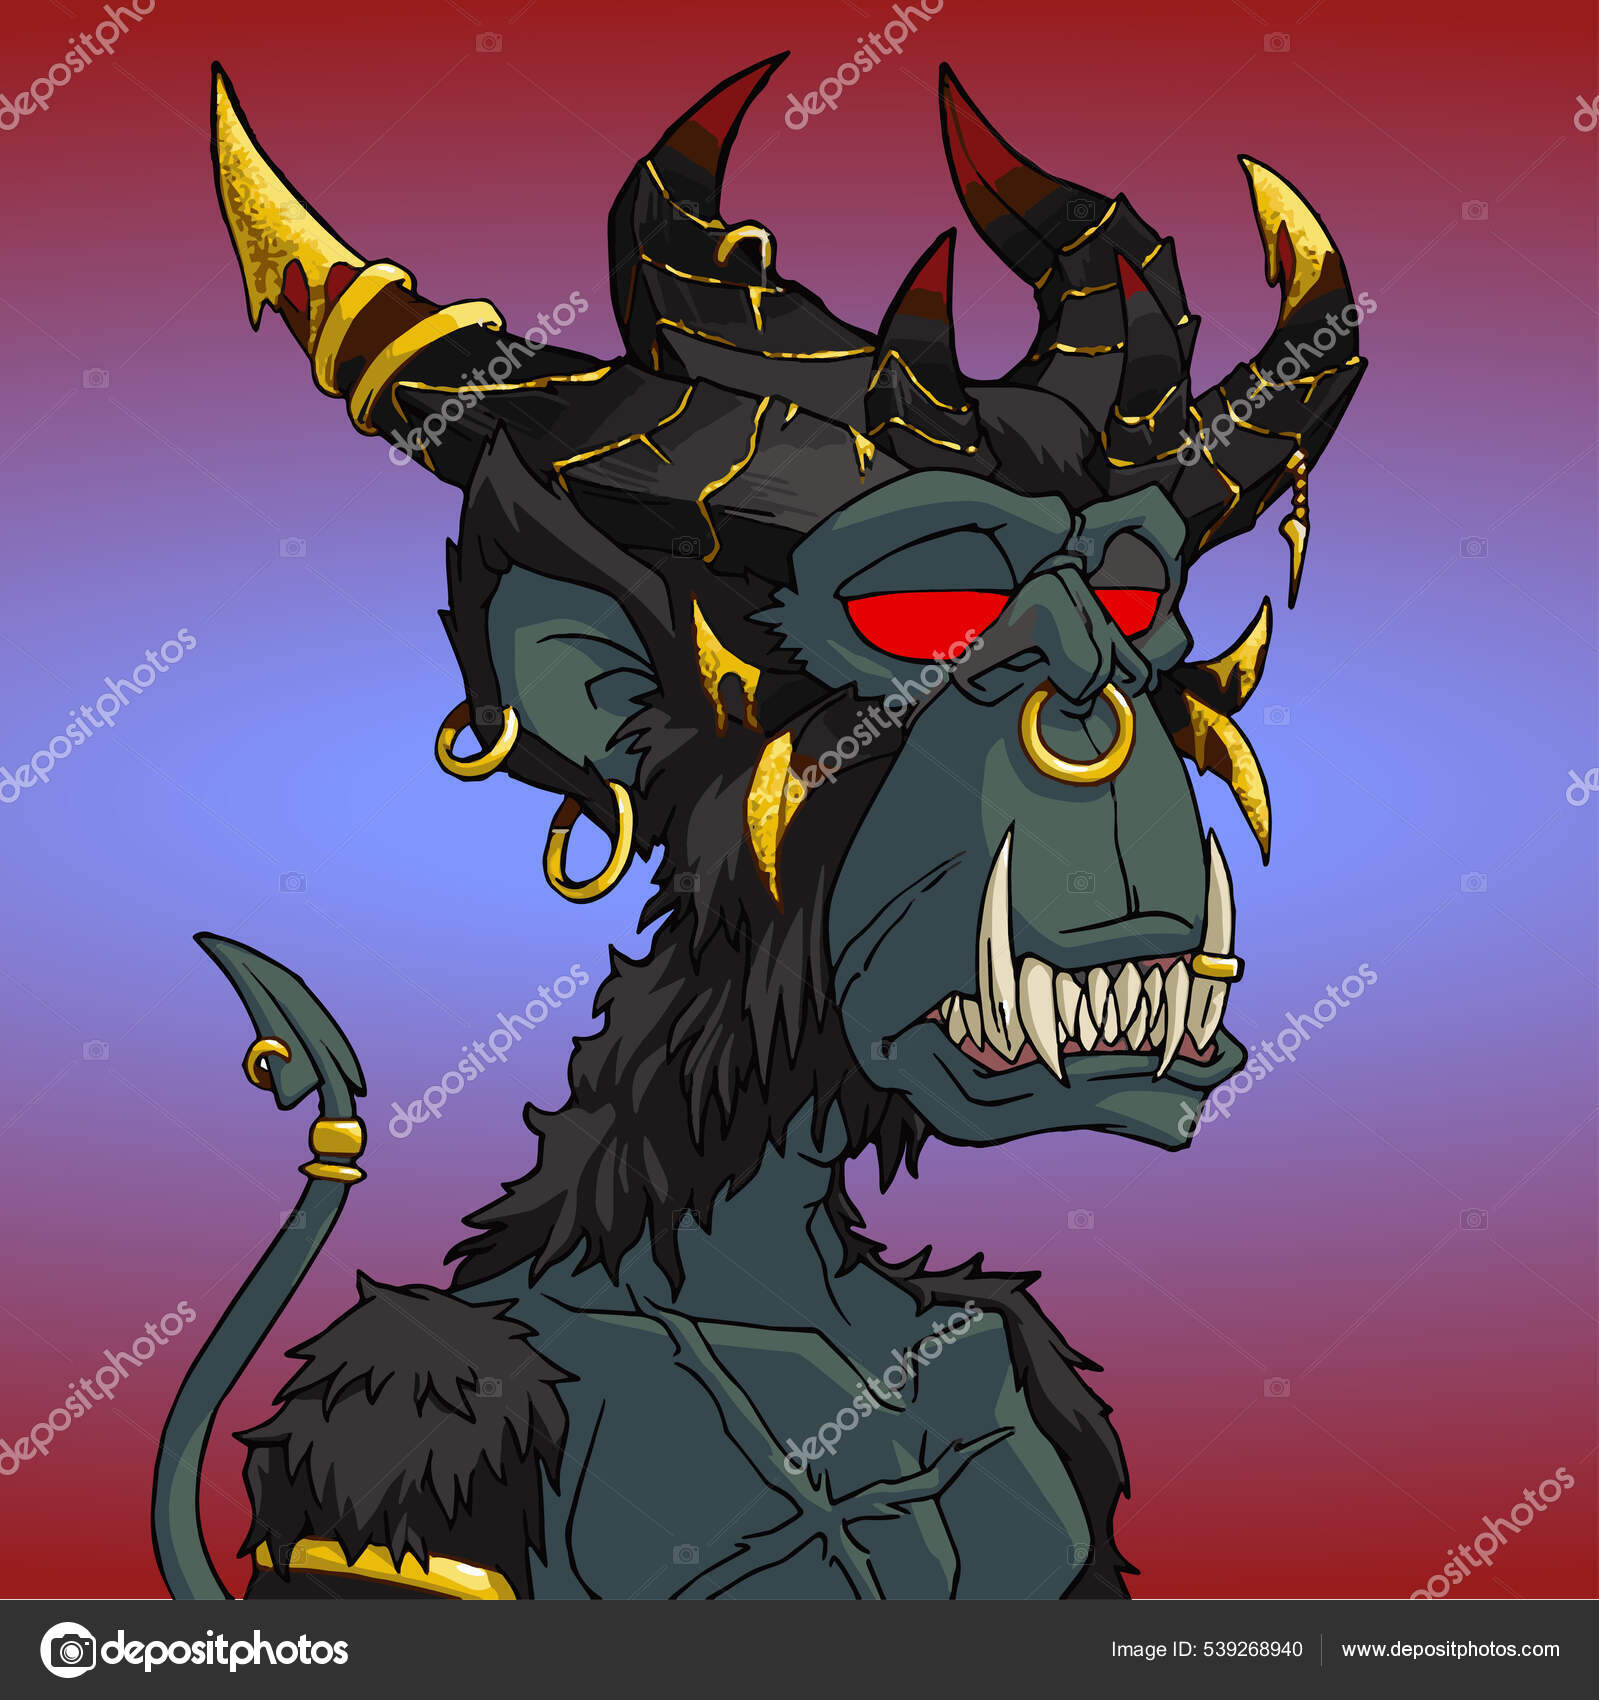 Evil Demon Animated Wallpaper  on